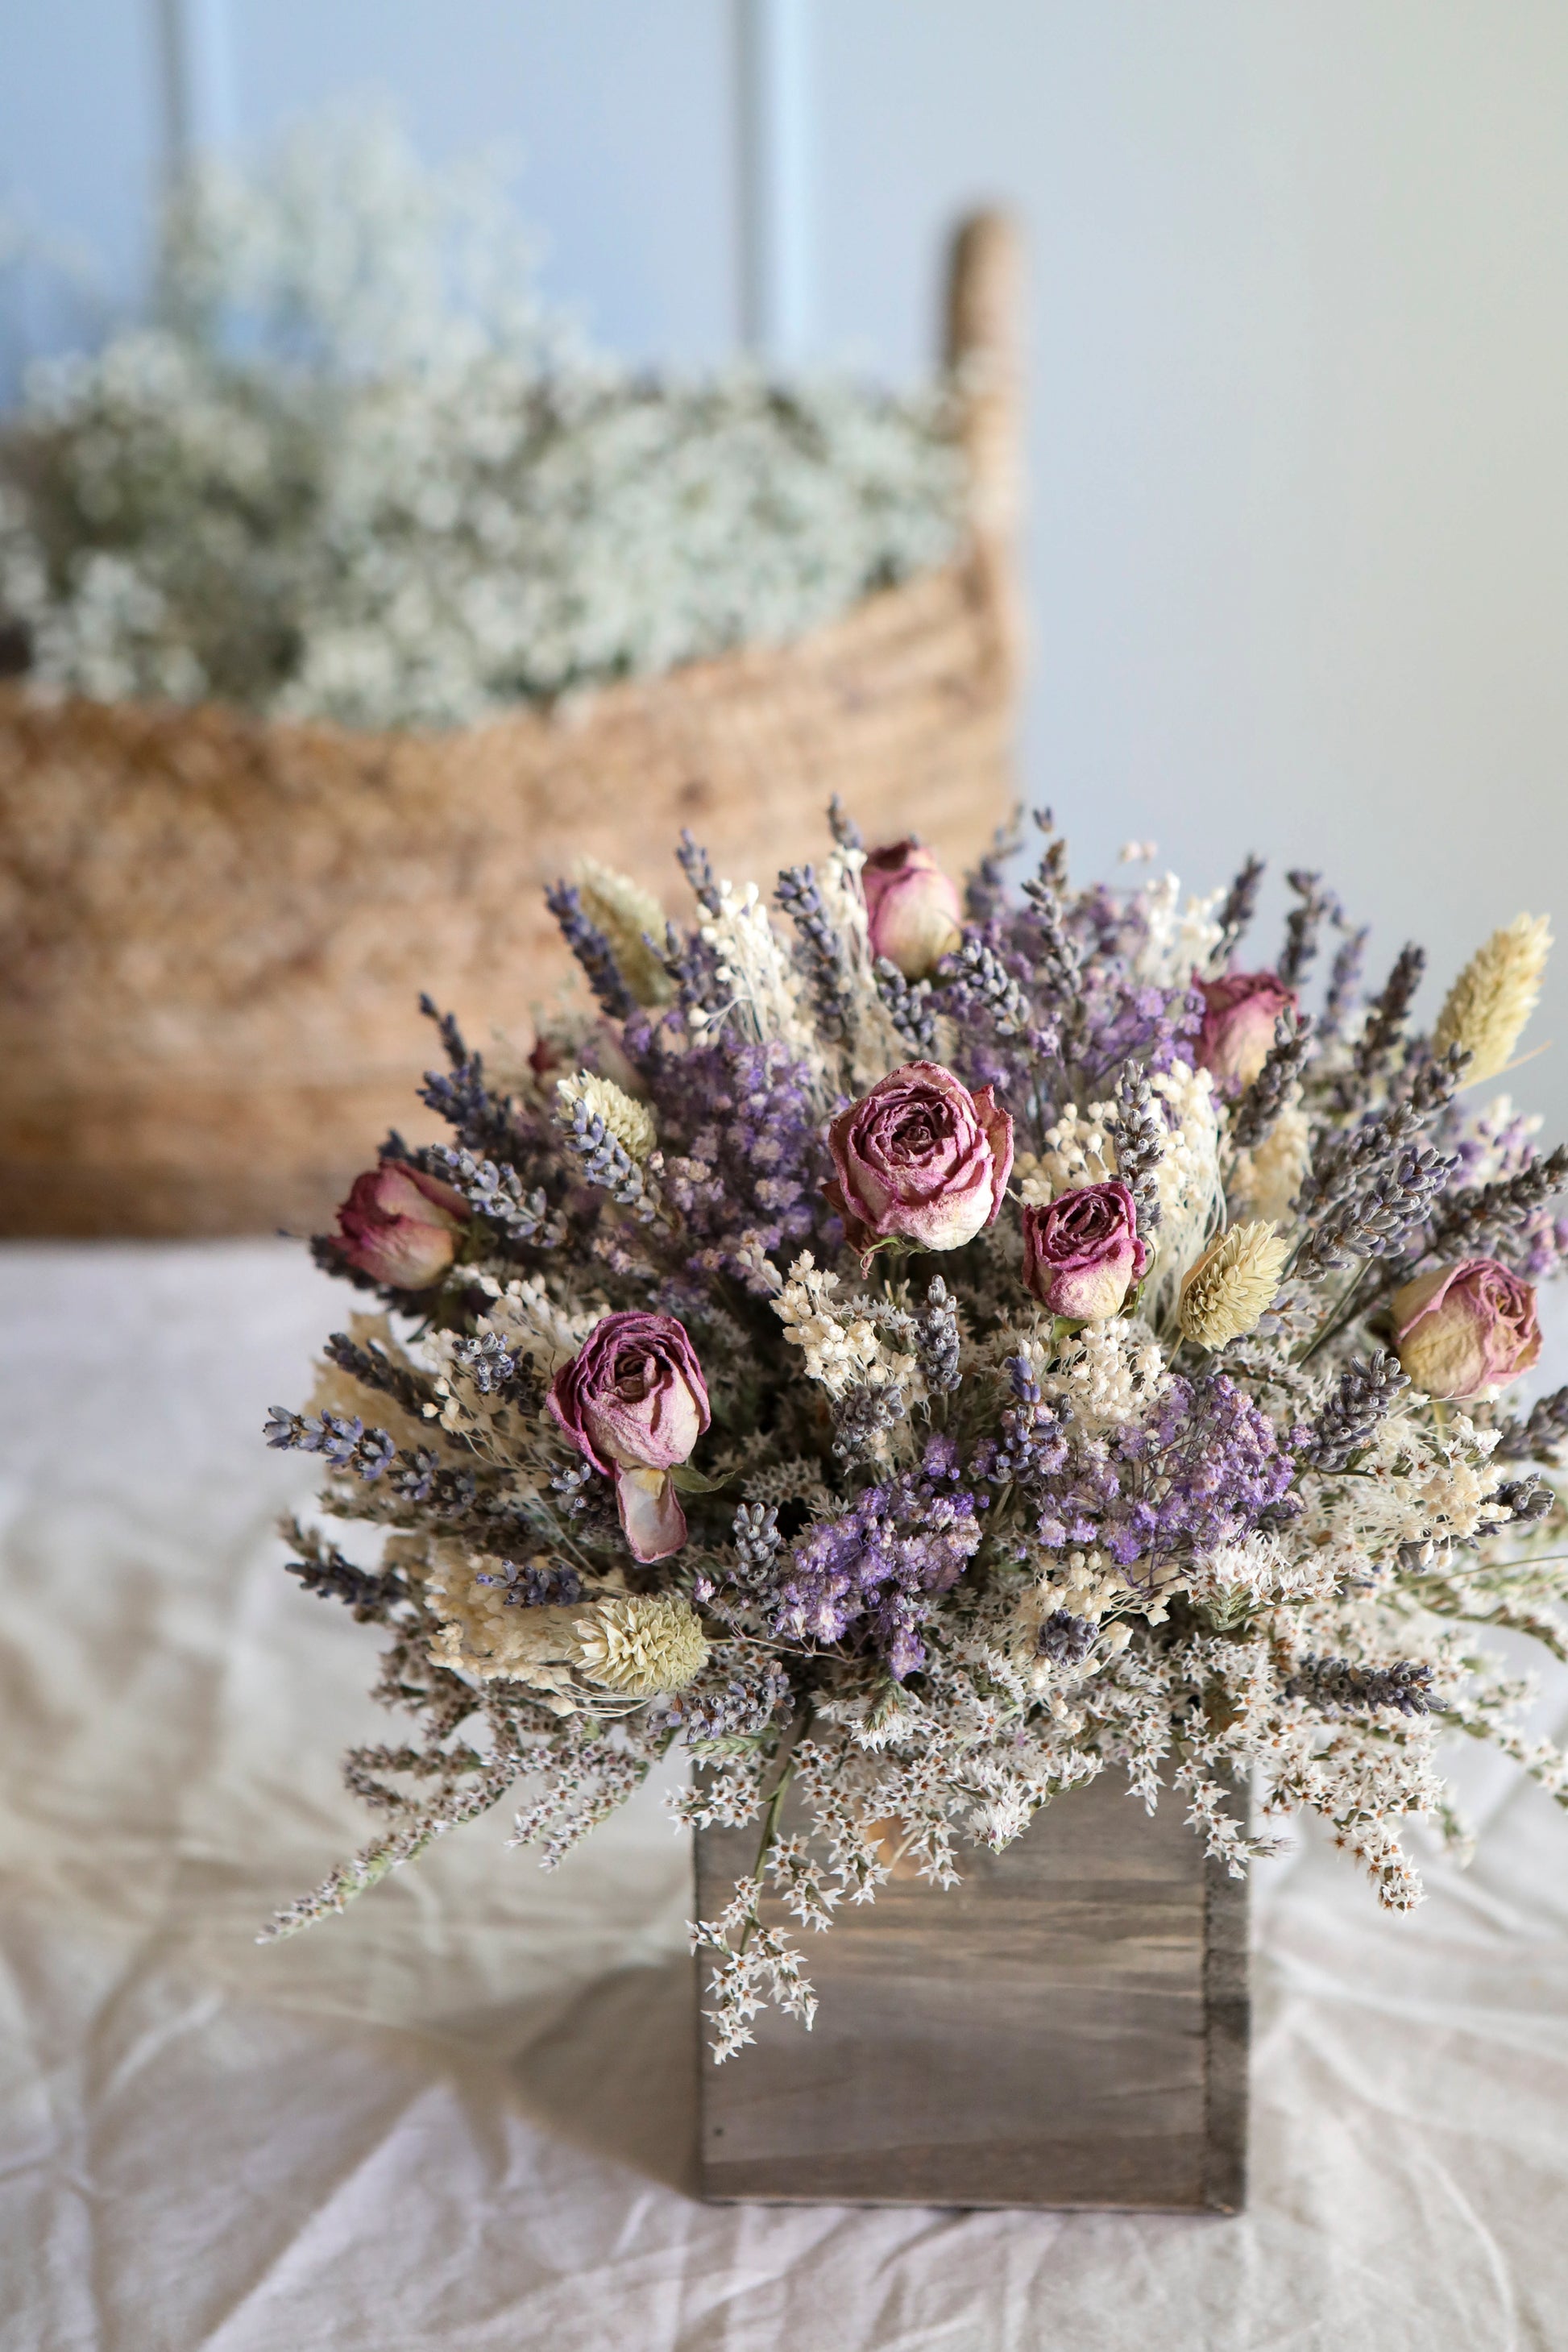 250 French Lavender Stems Dried Flowers Wedding Decor Centerpiece